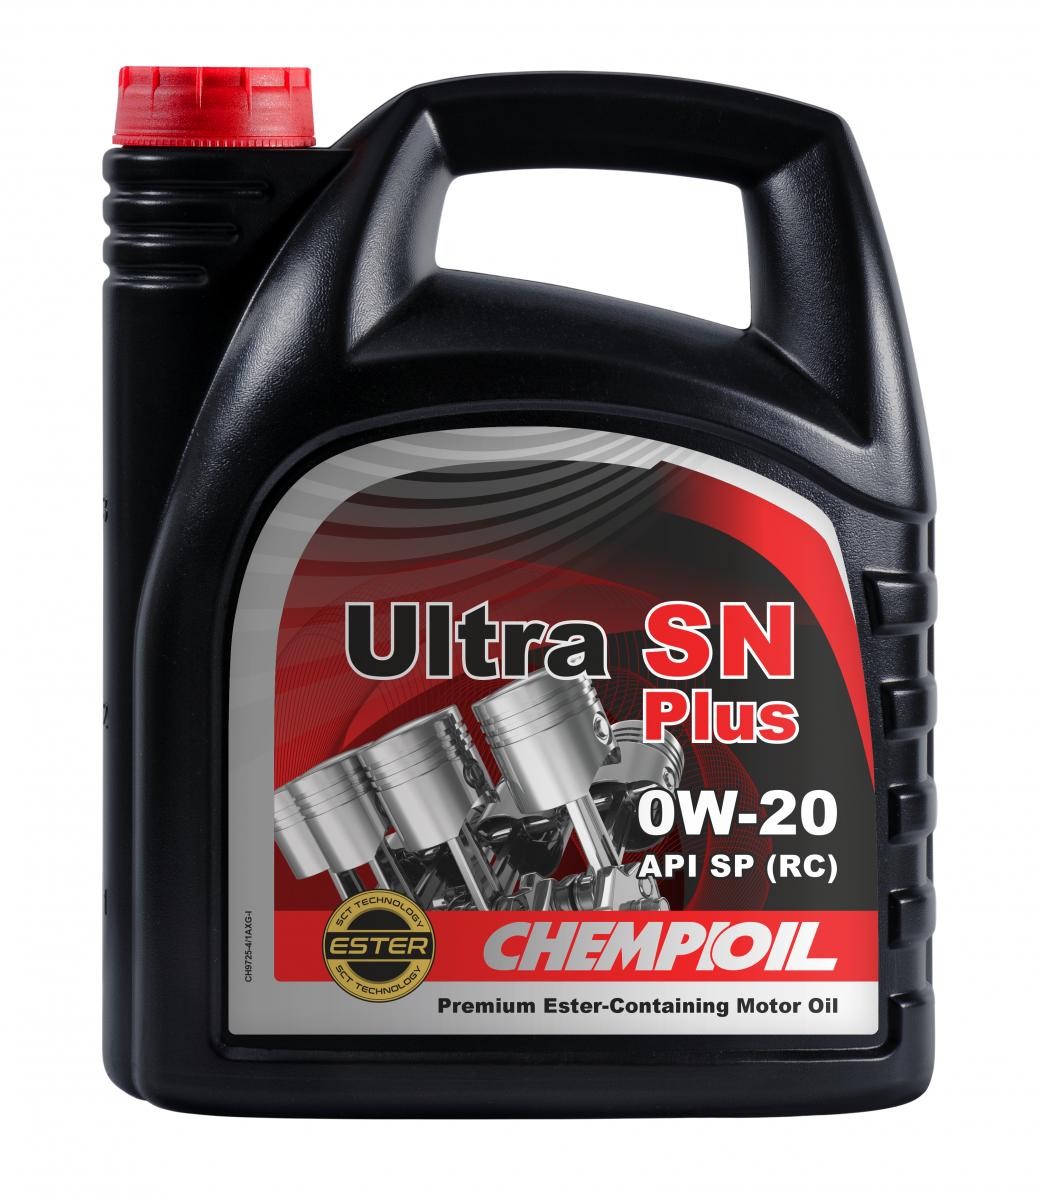 CHEMPIOIL Ultra, SN Plus 0W-20, 4l Motor oil CH9725-4 buy